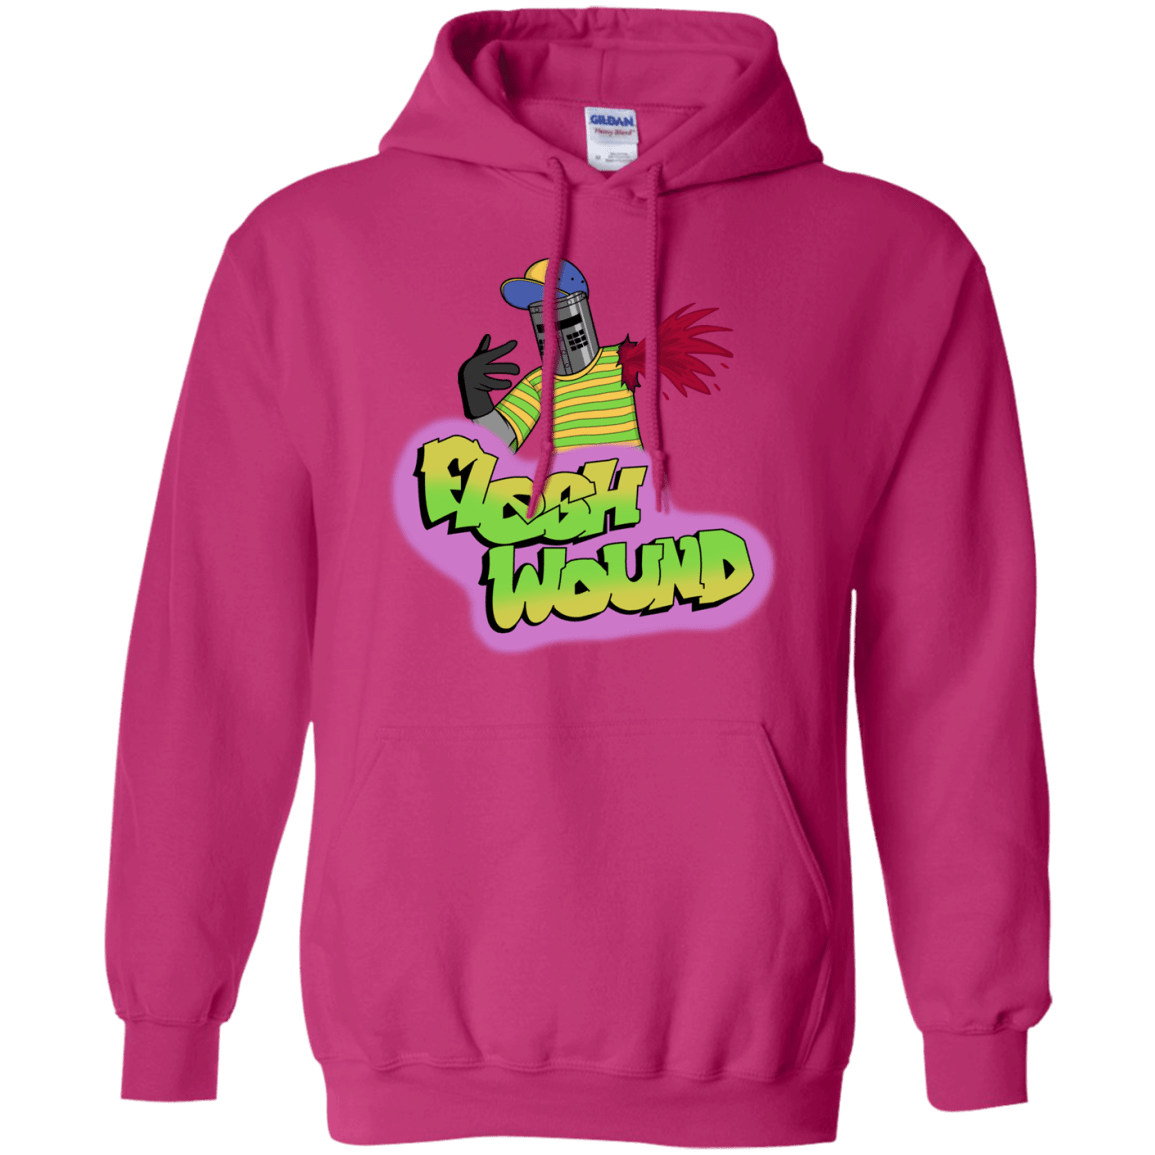 Sweatshirts Heliconia / S Flesh Wound Hoodie